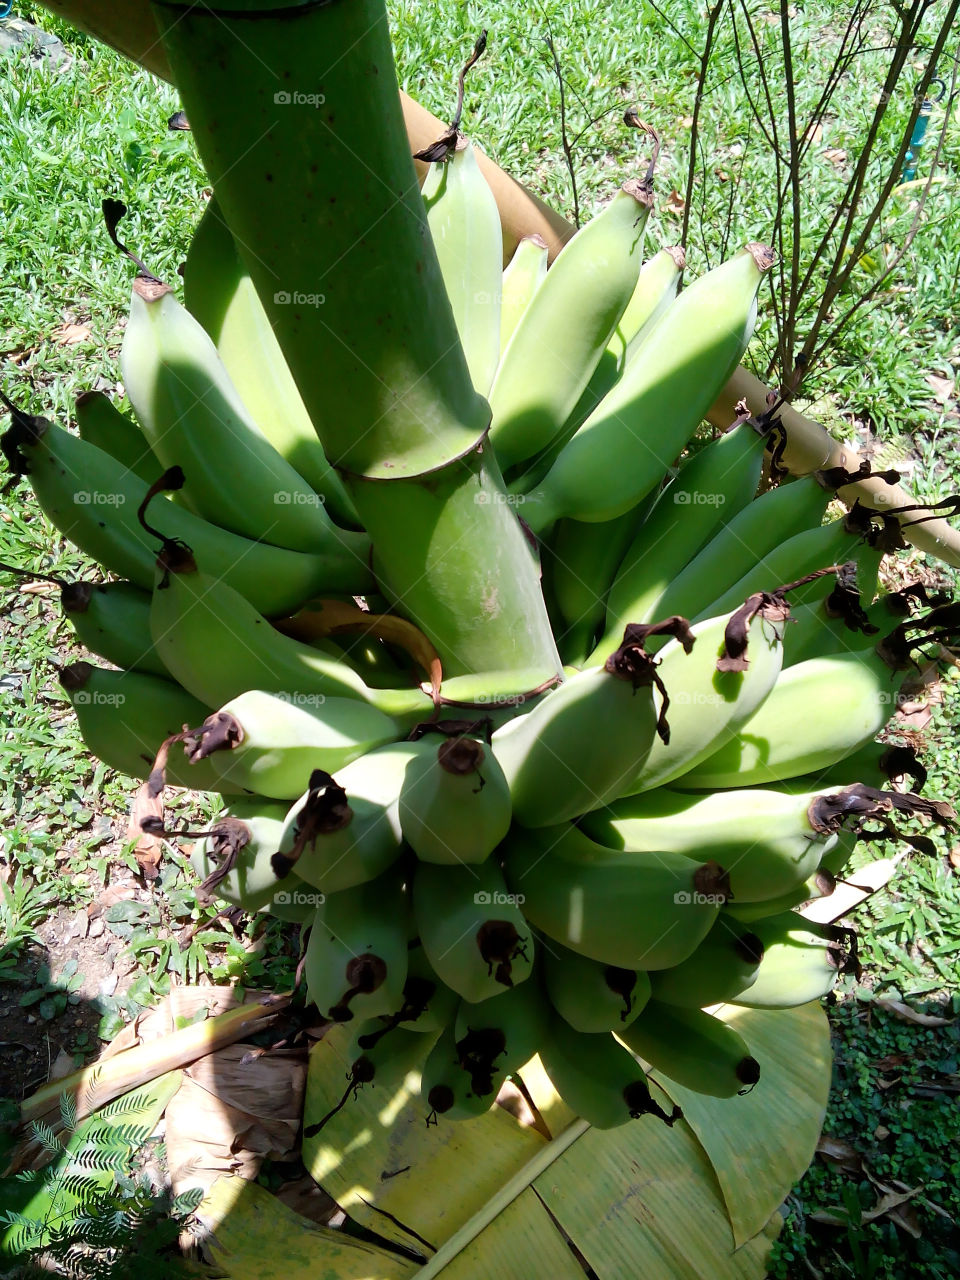 banana. the banana fruits grow from a banana heart in hanging clusters